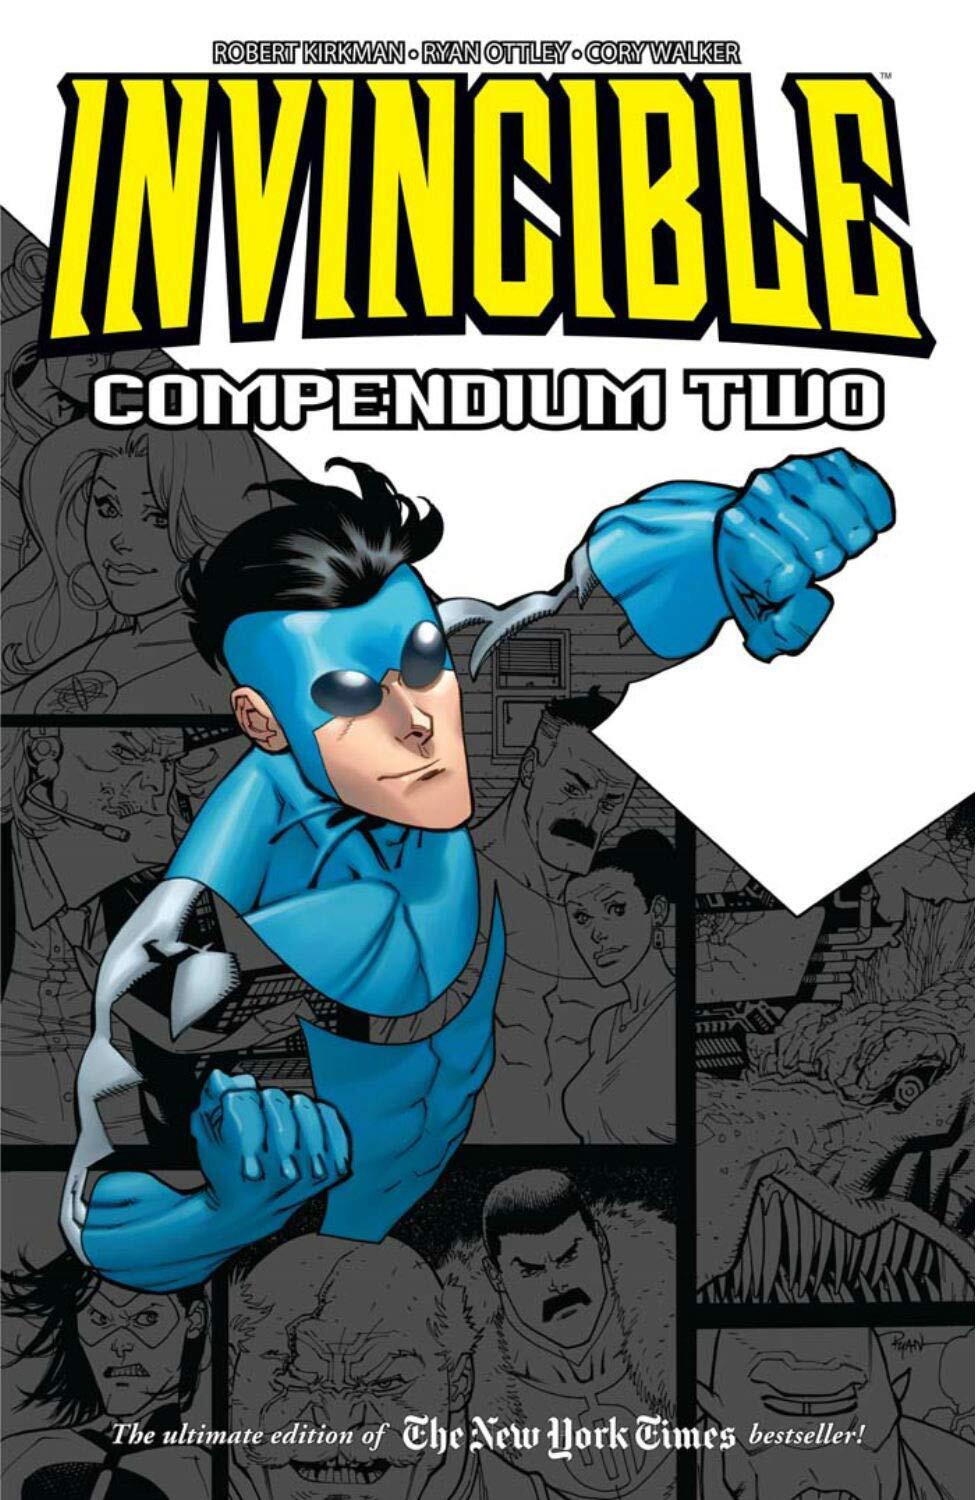 Invincible Compendium Volume 2 by Kirkman